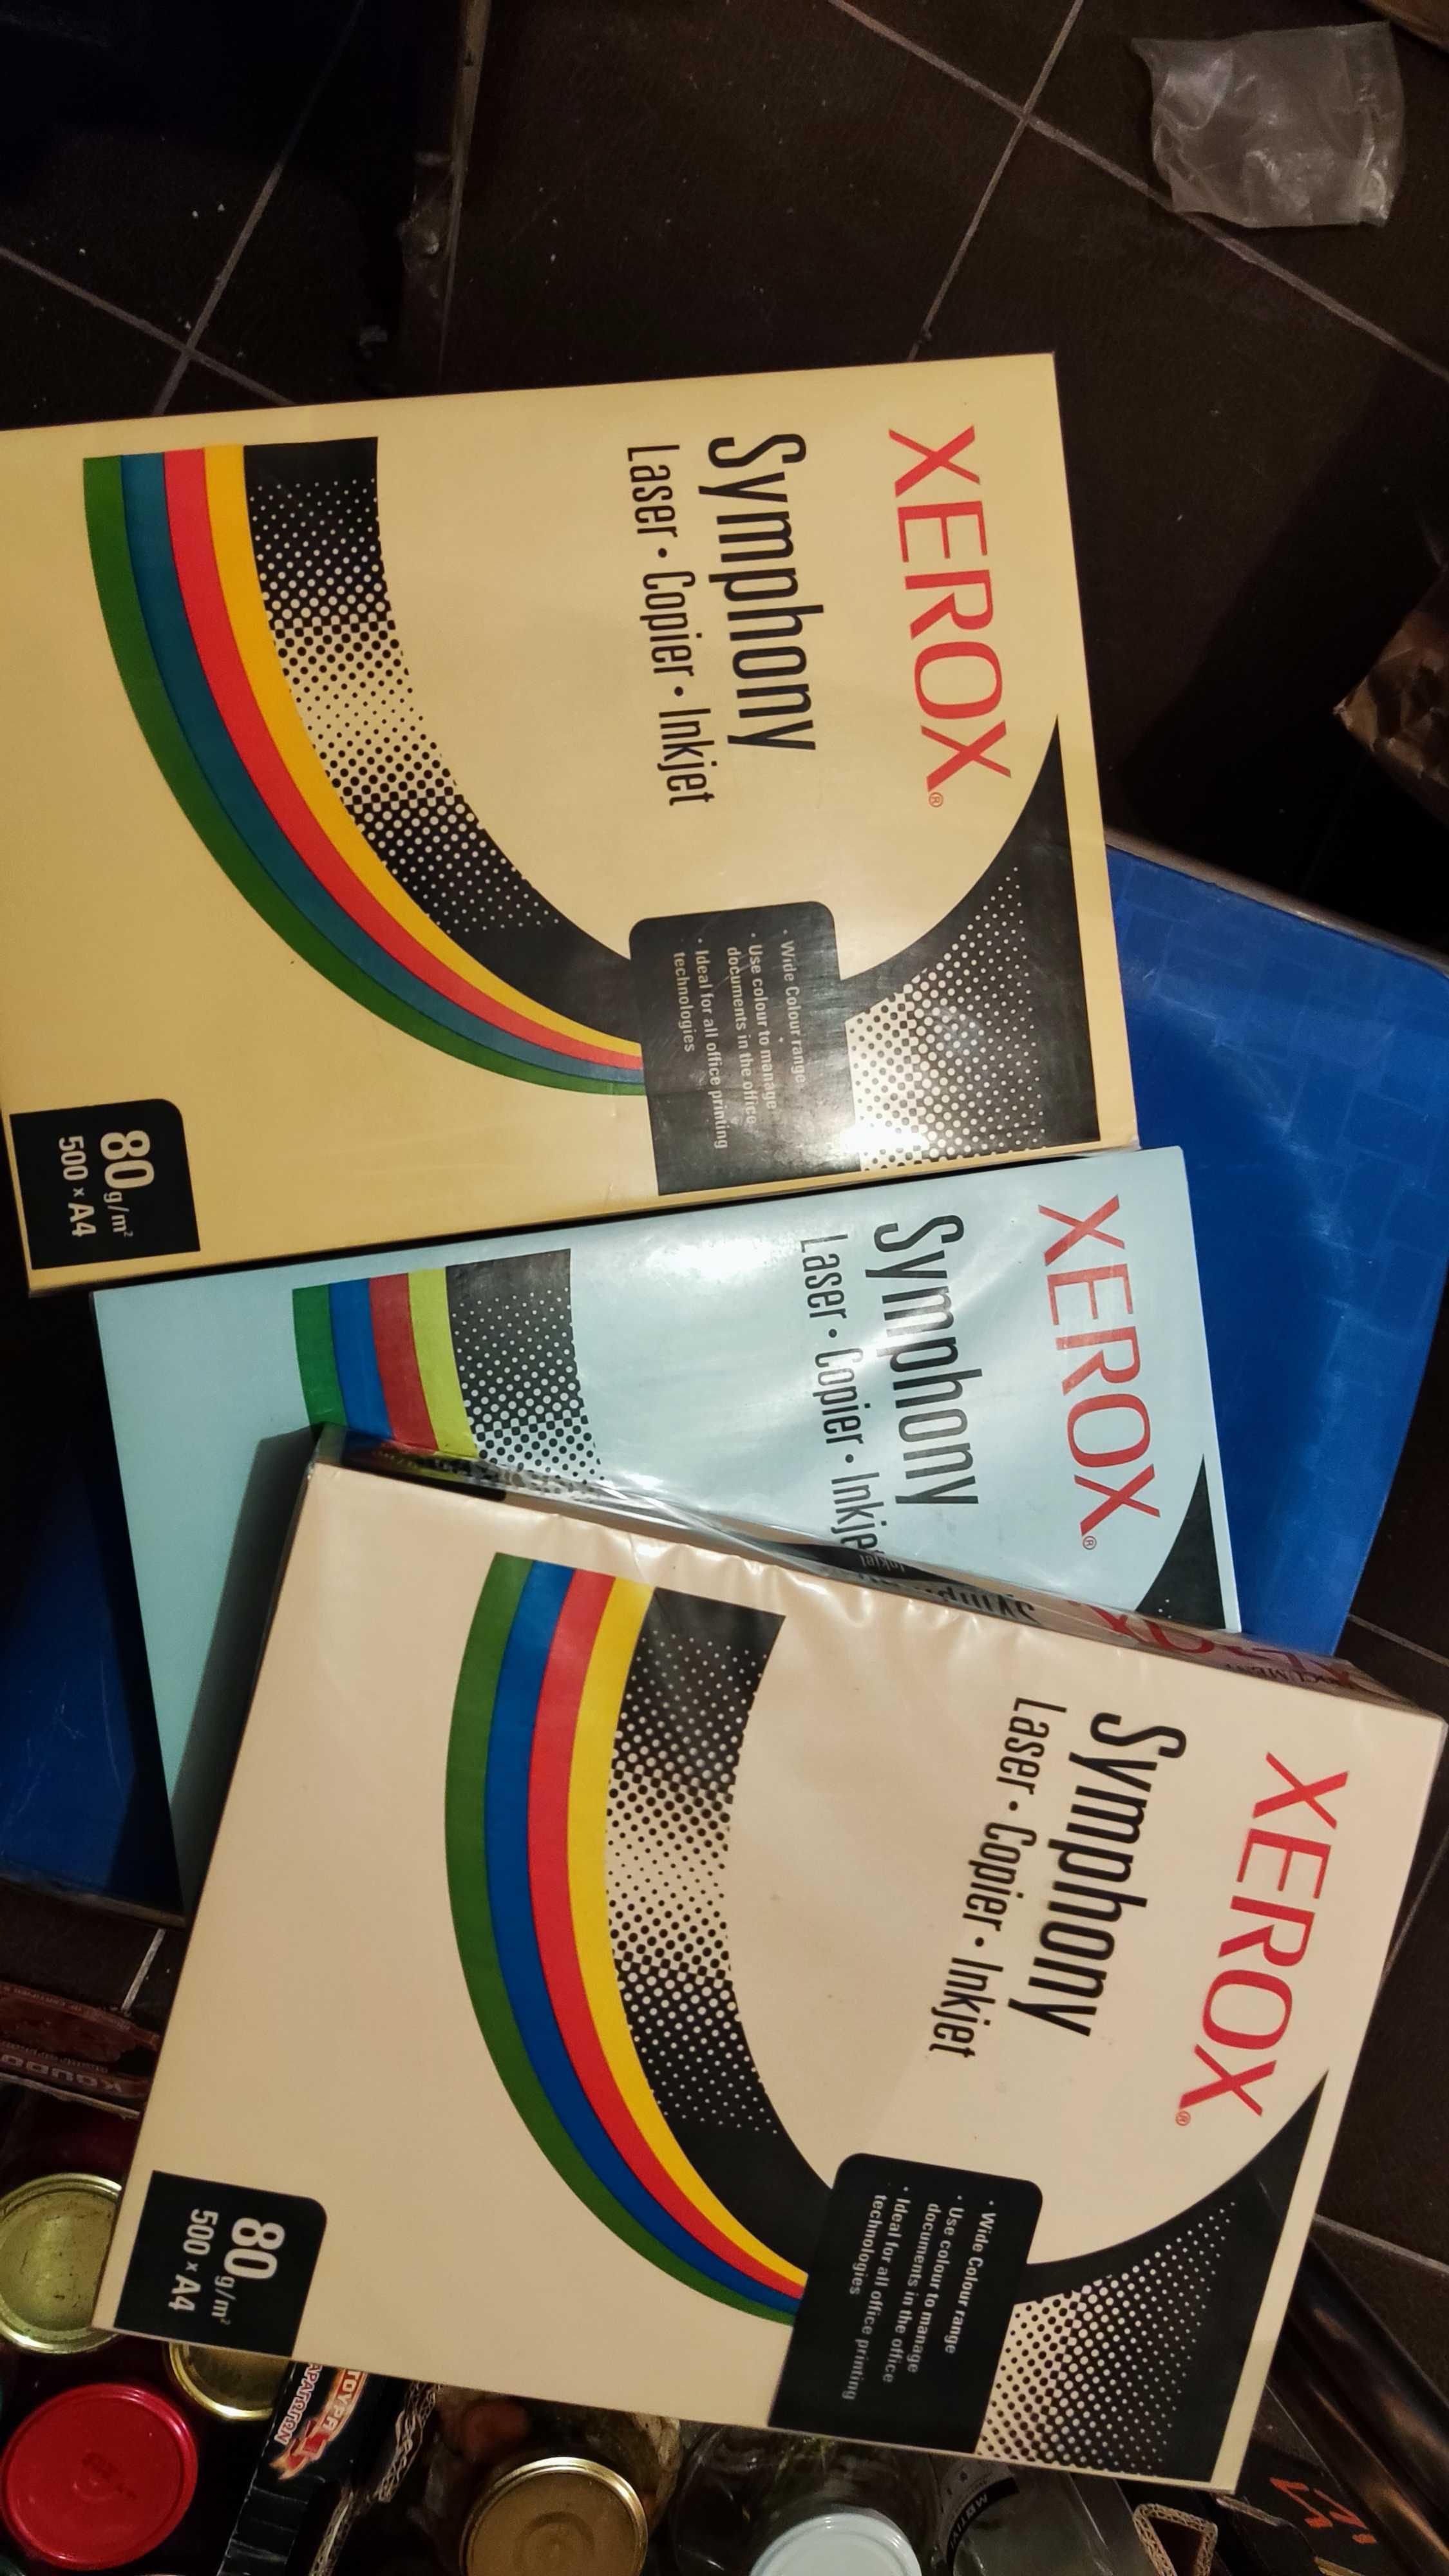 Цветна хартия Xerox Symphony